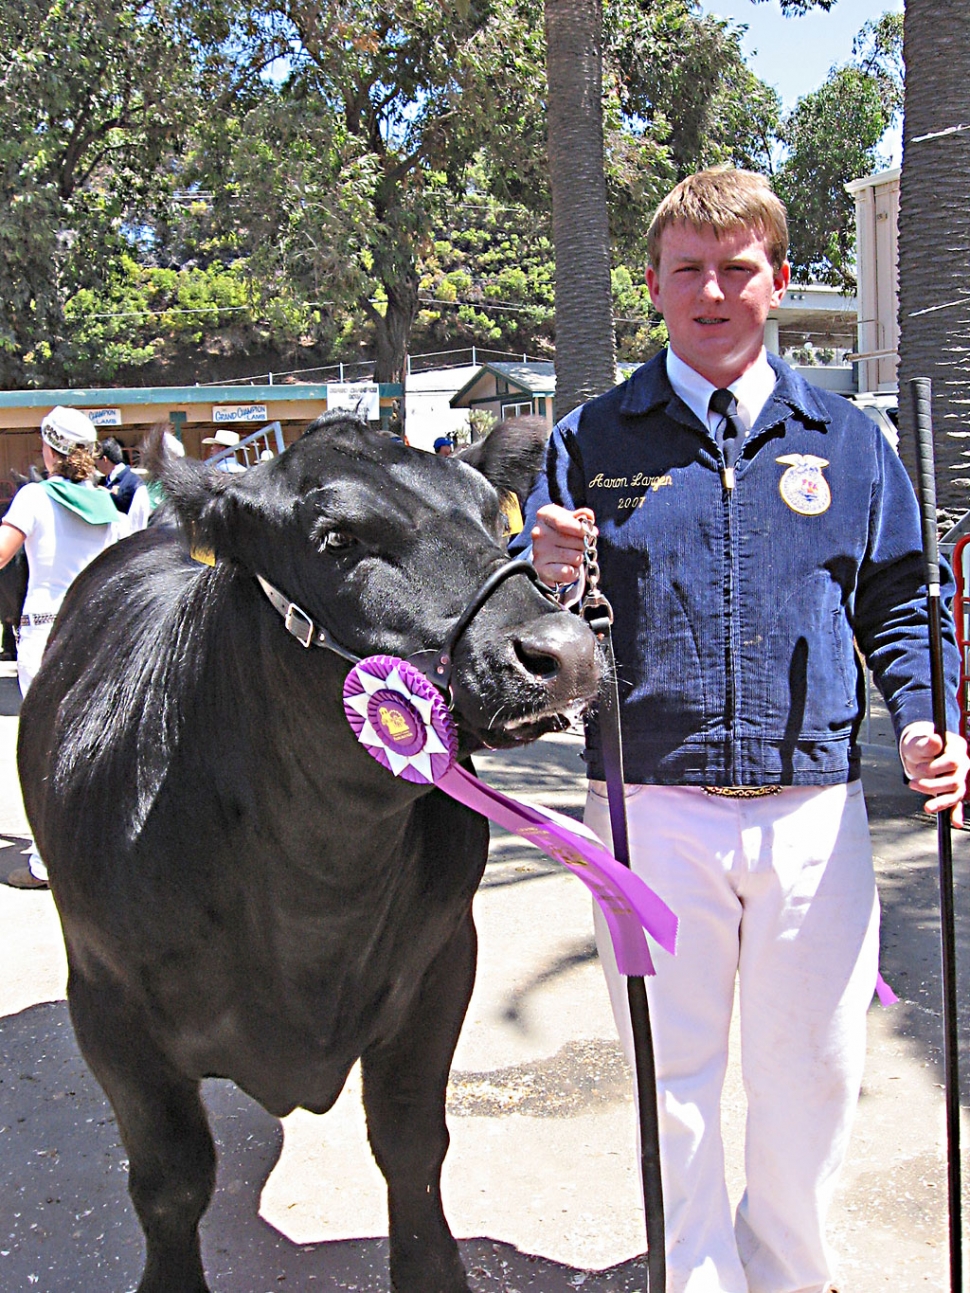 Future Farmer of America’s Aaron Largen’s steer won Grand Champion Market Steer.